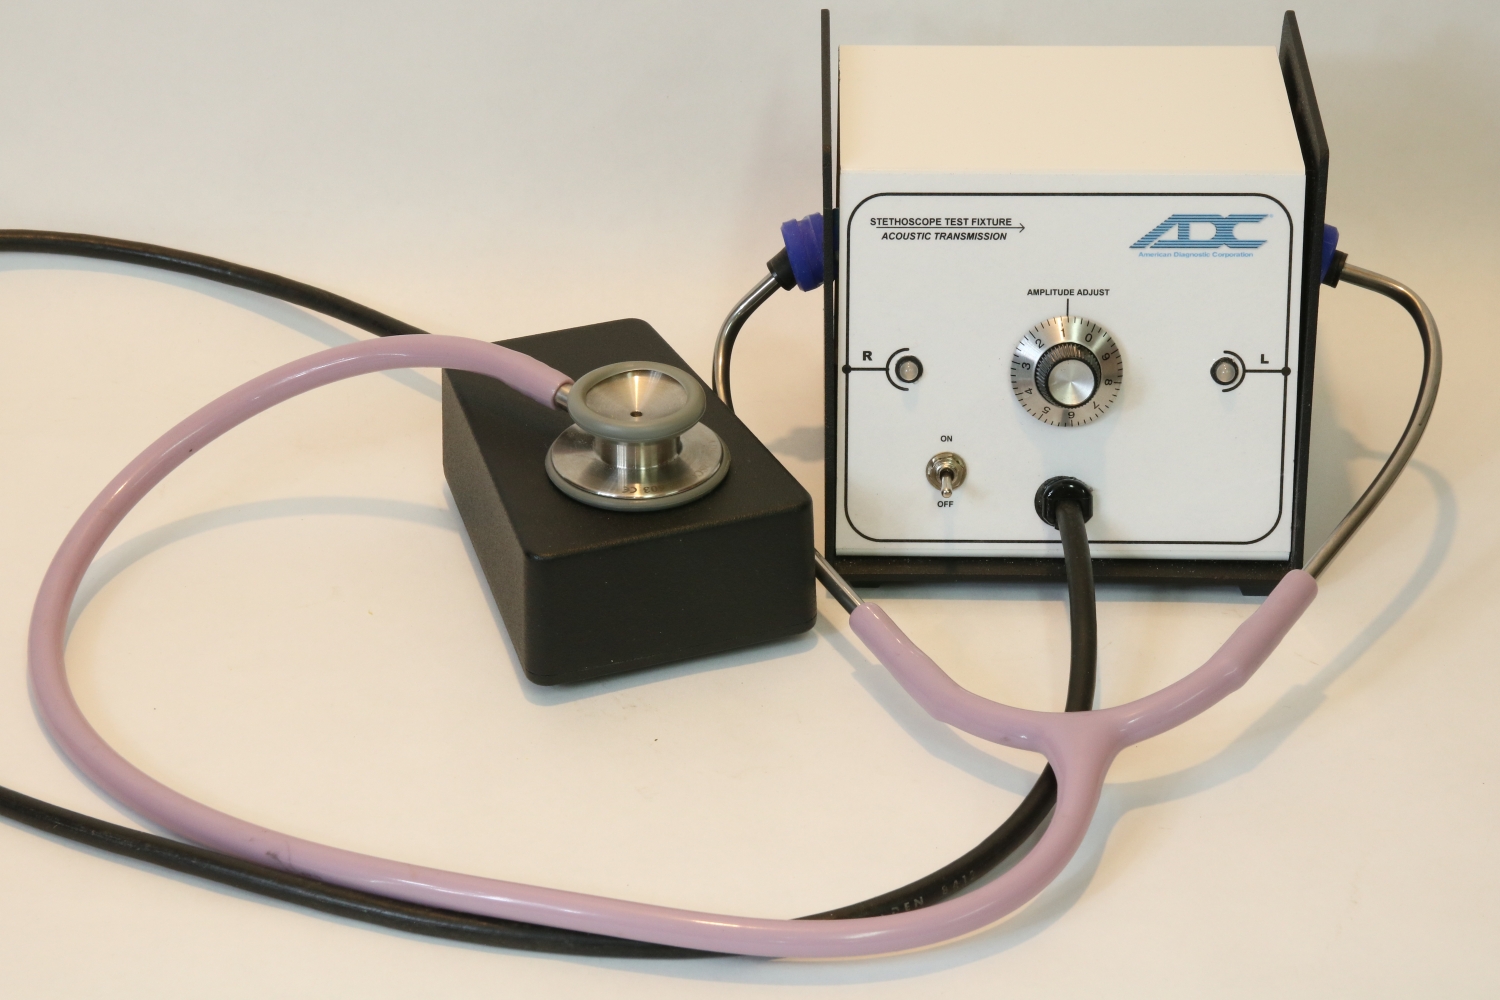 Stethoscope Acoustic Transmission Test Fixture, Custom Branded